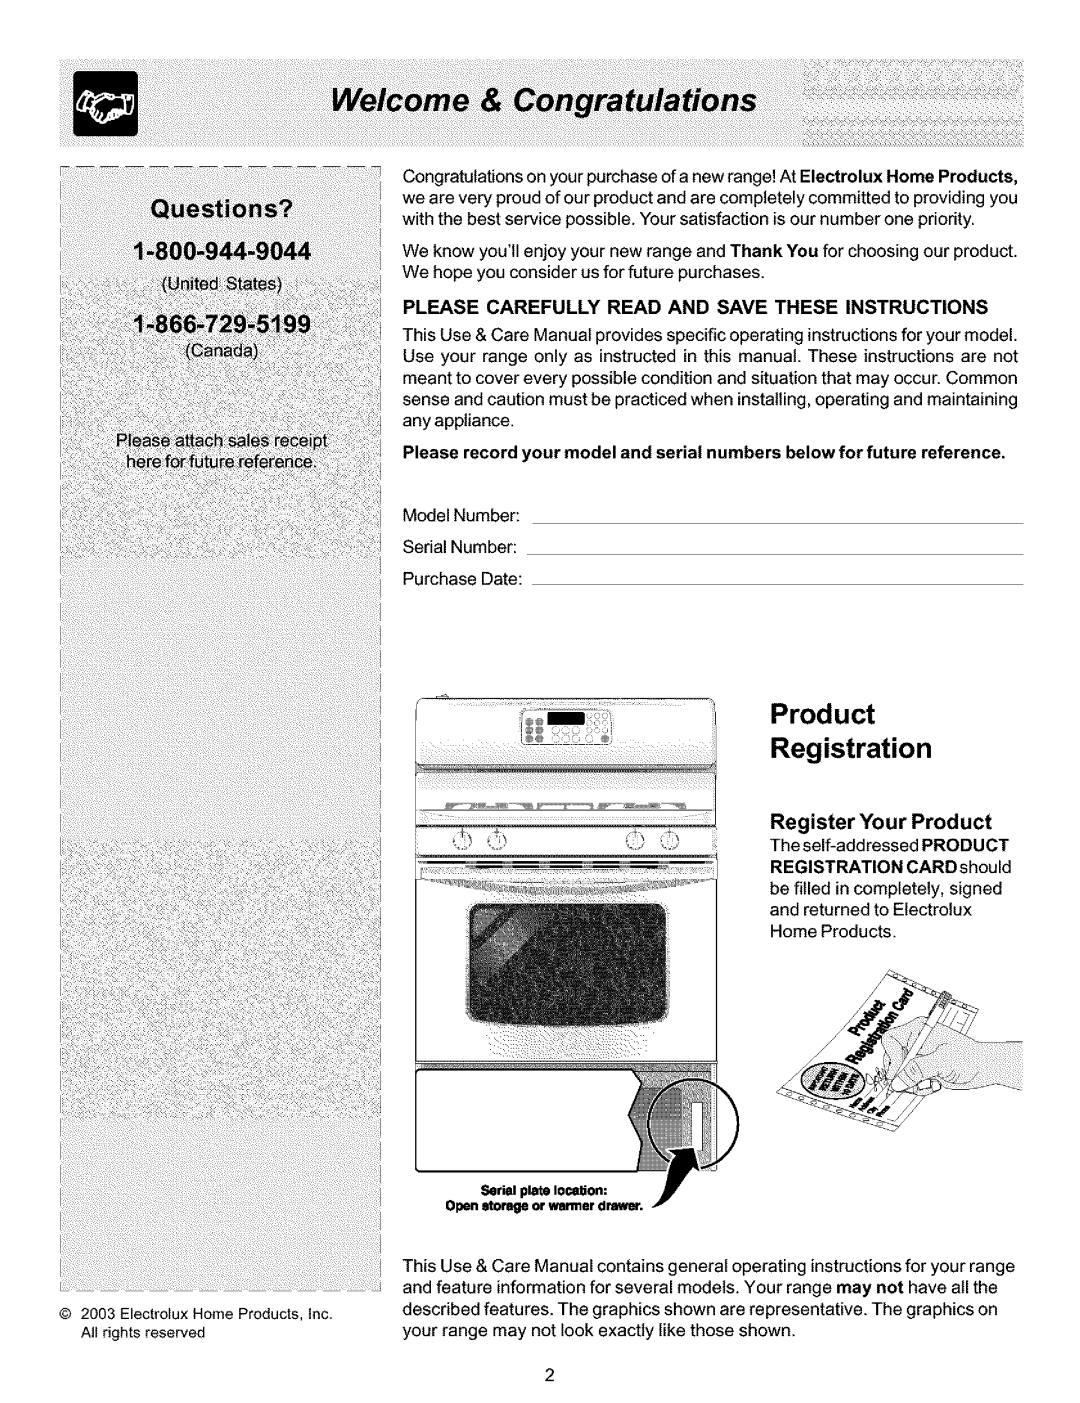 Frigidaire ES400 manual Product Registration, Register Your Product 